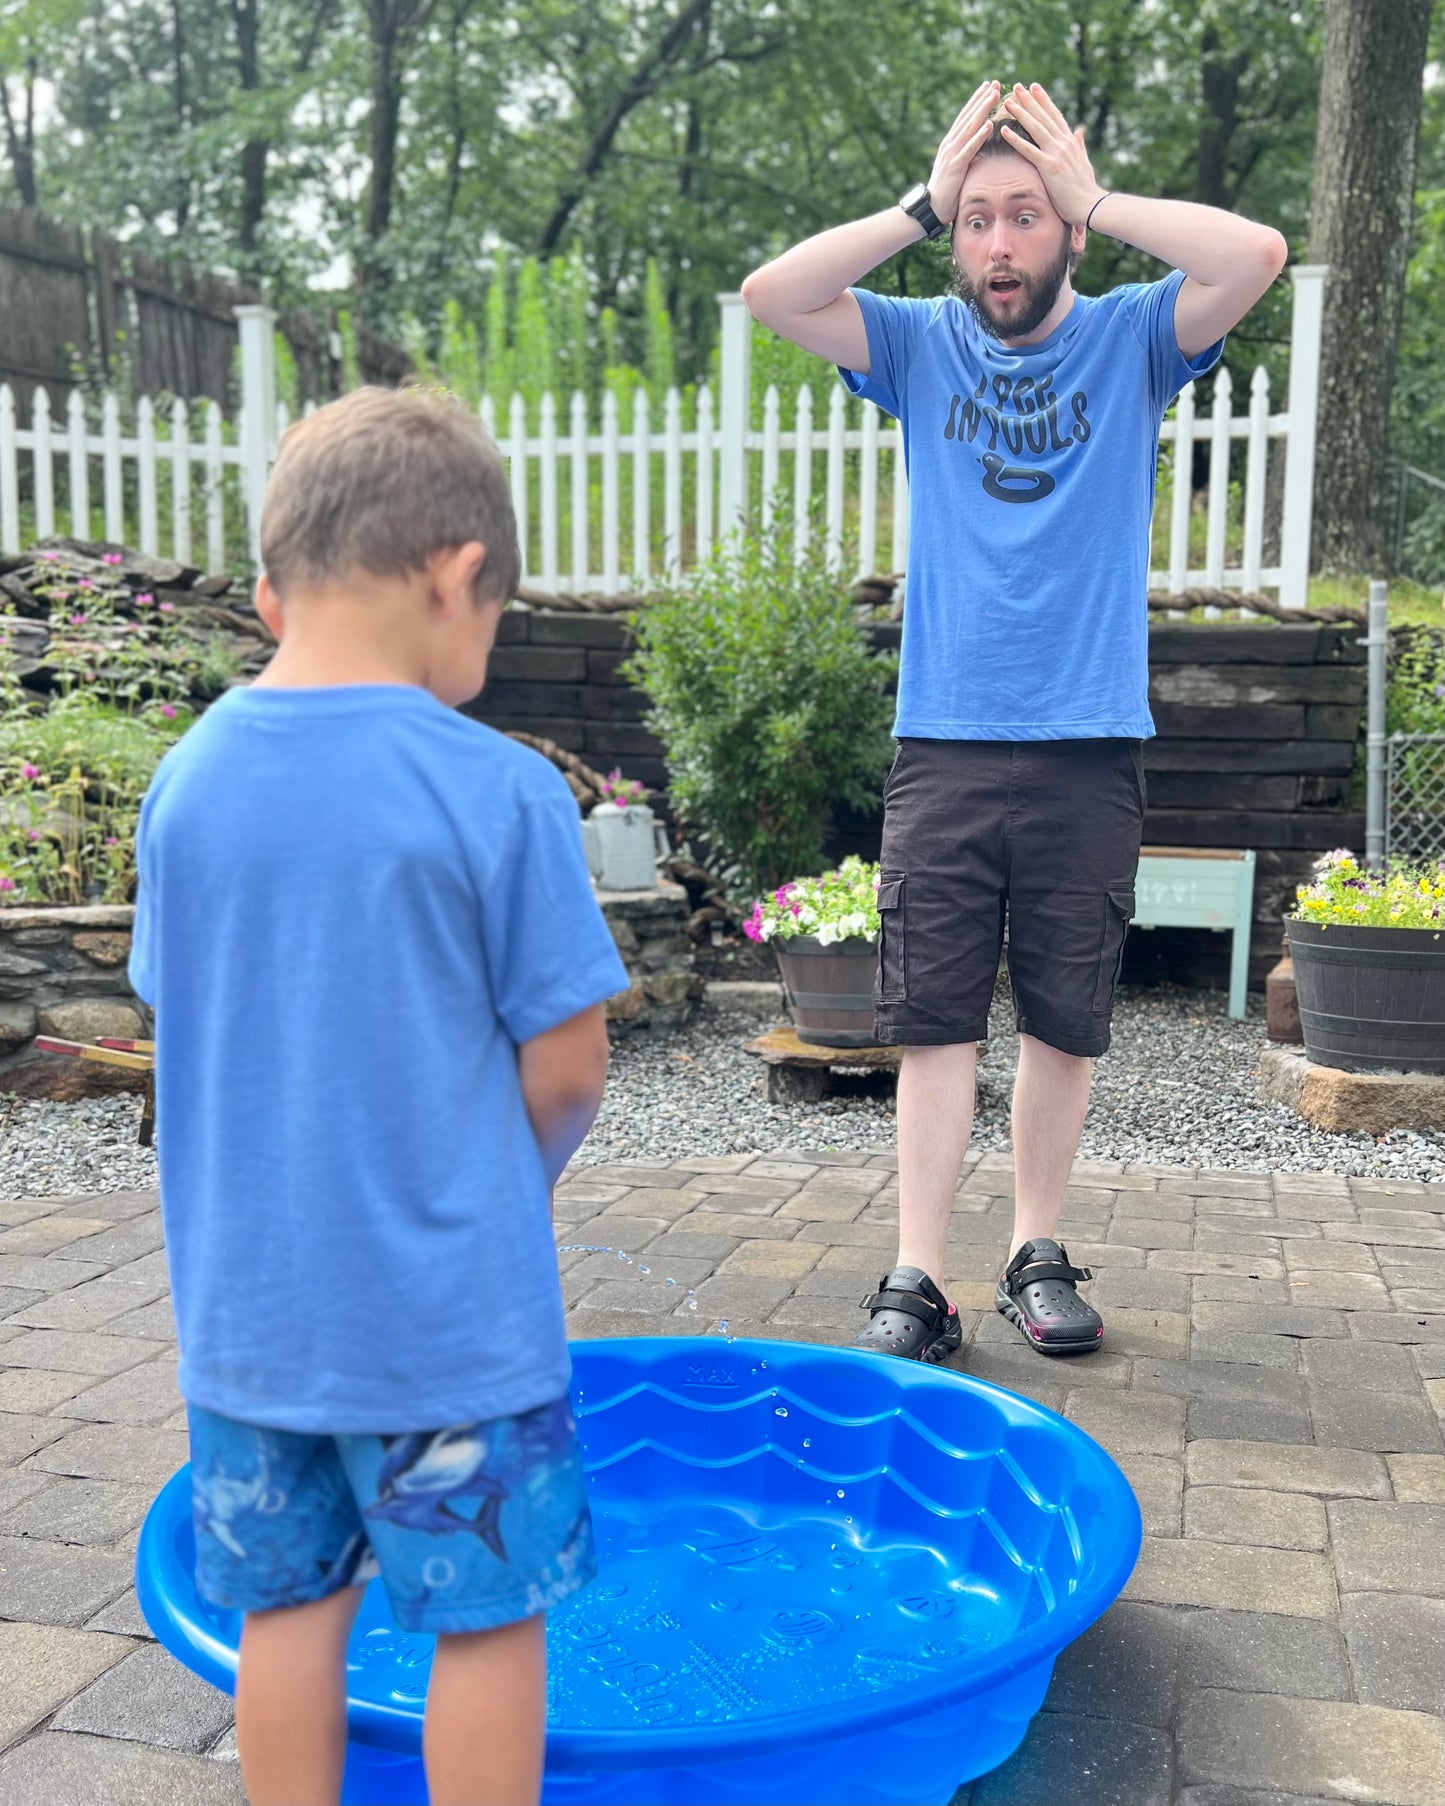 I Pee In Pools | Adult T-Shirt